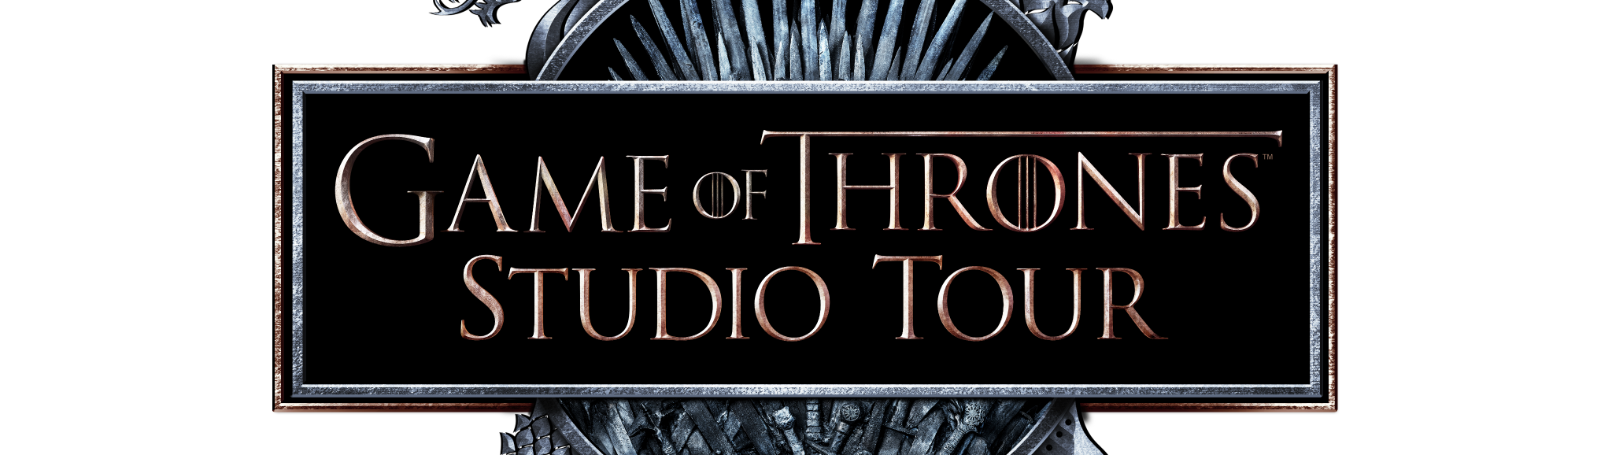 Game of Thrones Studio Tour www.killeavycastle.com_v2